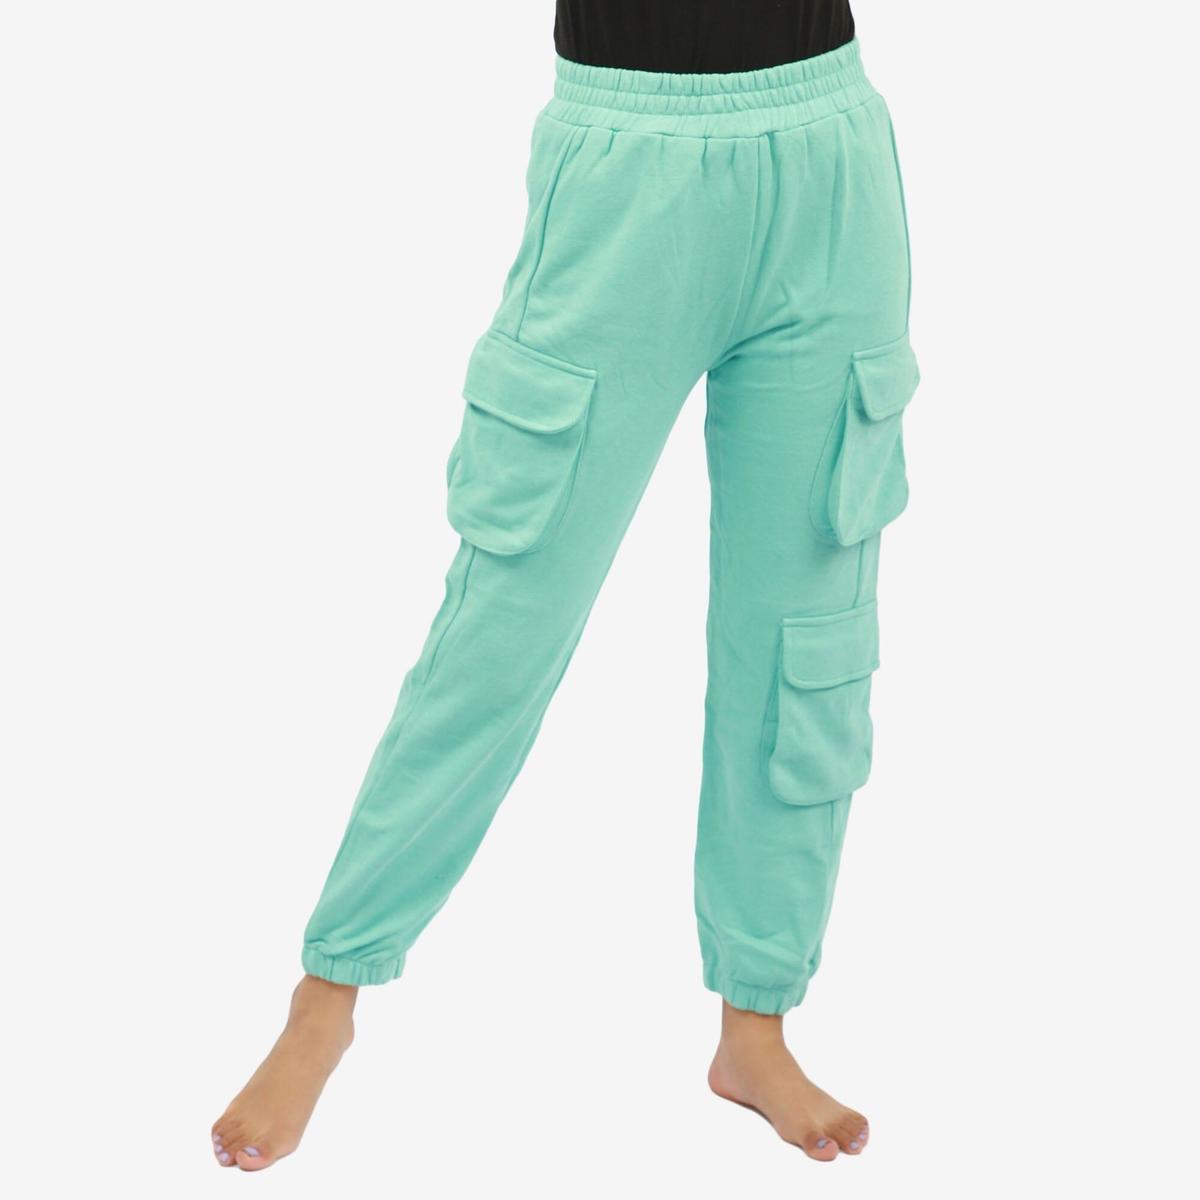 aqua blue cotton side pocket design joggers for women